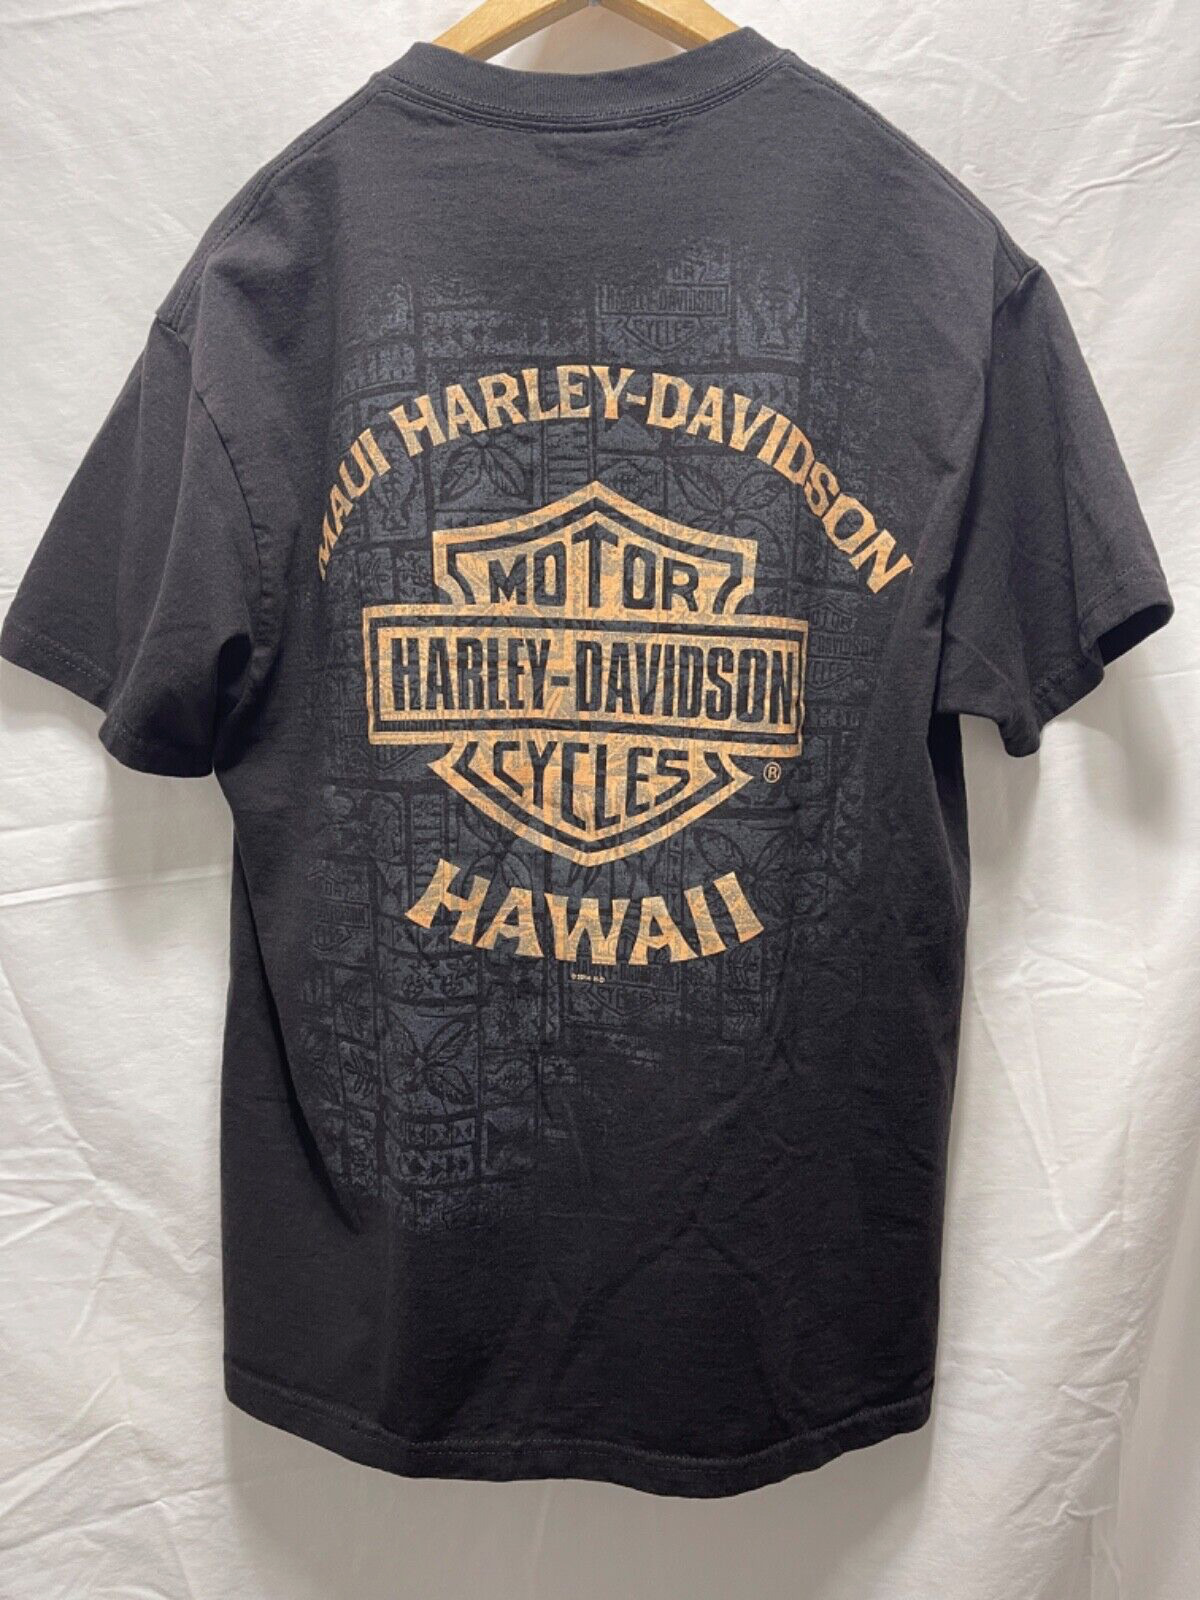 HARLEY-DAVIDSON MotorCycles black Maui Harley-Davidson spellout shirt size Large